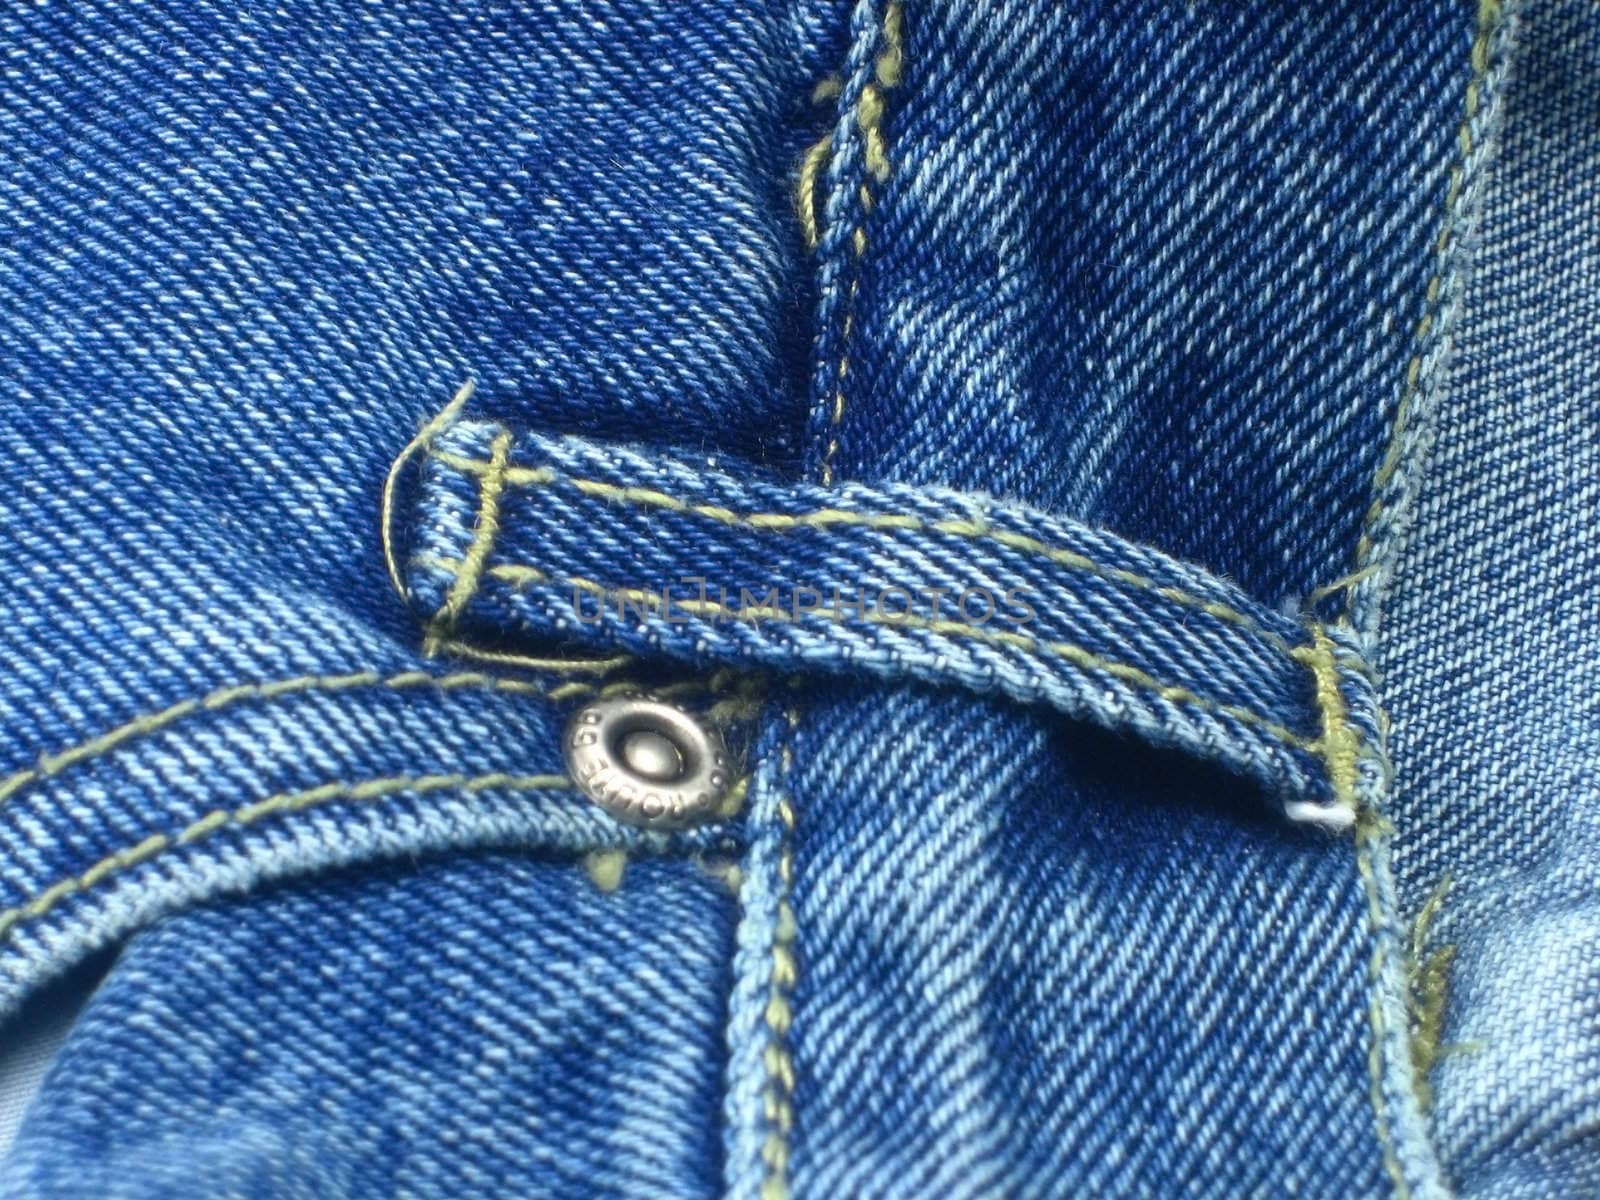 Details of blue jeans